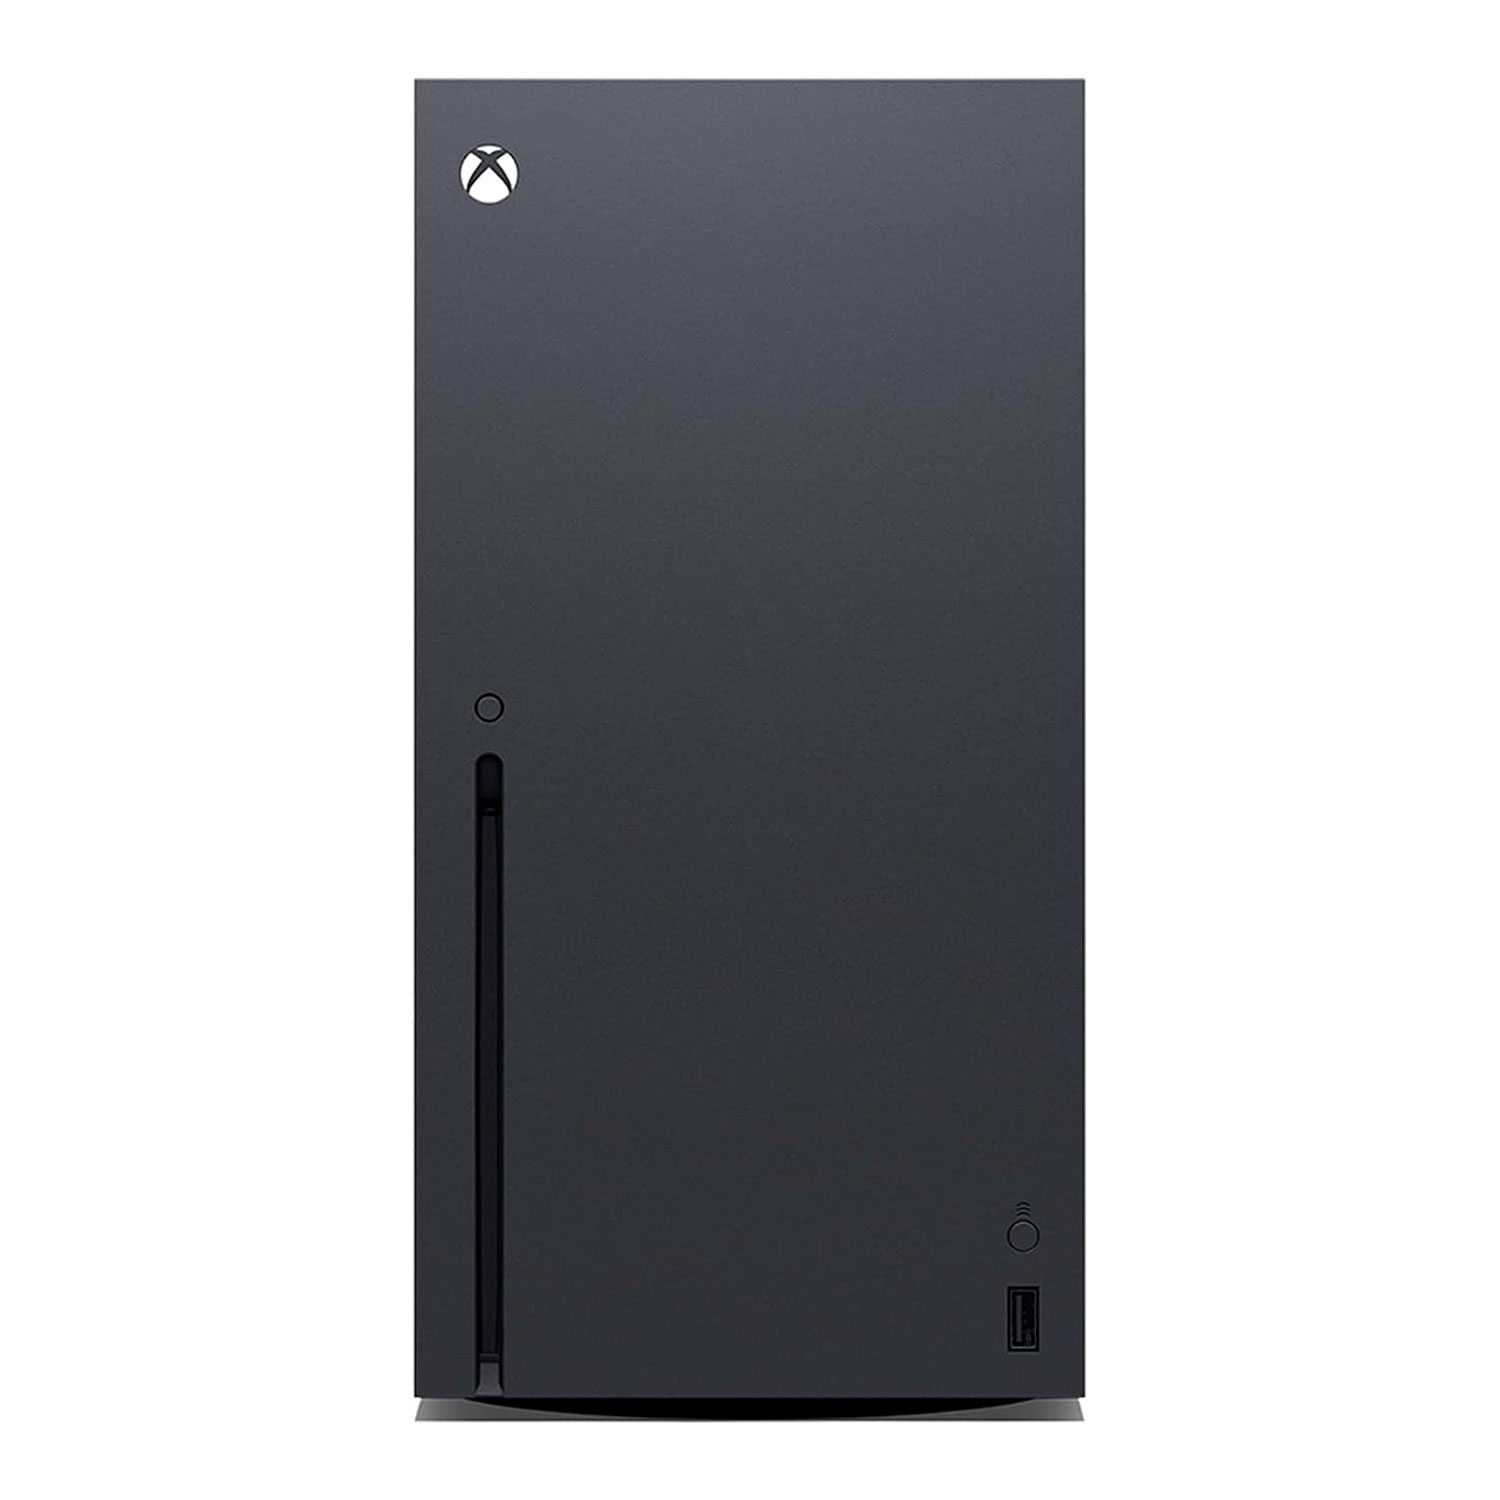 Console Xbox Series X 1TB Japão - Preto (Caixa Danificada)